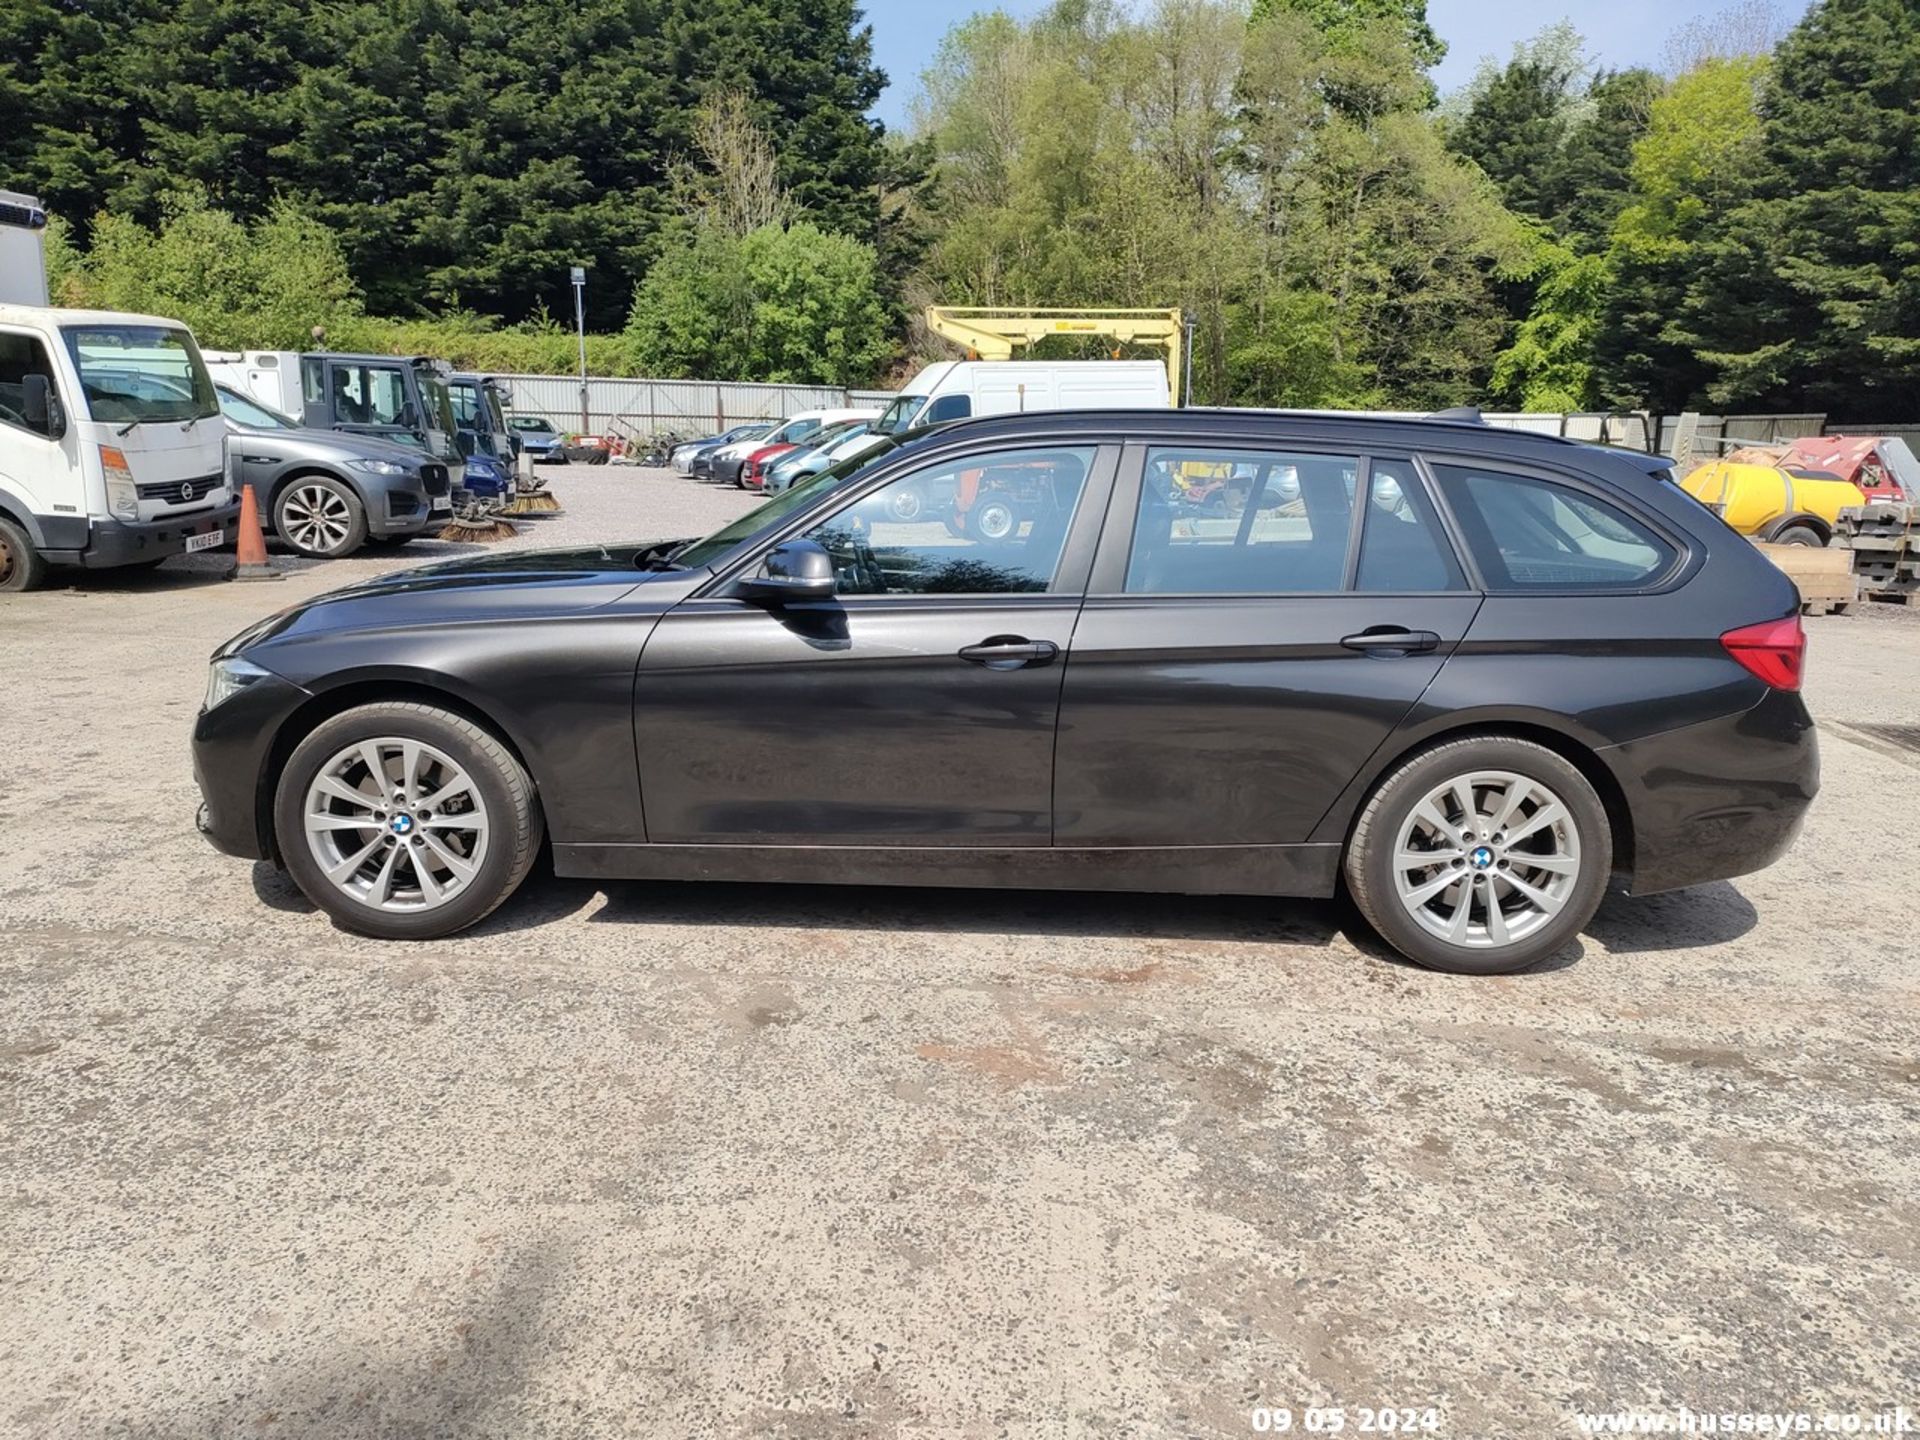 18/18 BMW 330D XDRIVE AC AUTO - 2993cc 5dr Estate (Brown) - Image 18 of 67